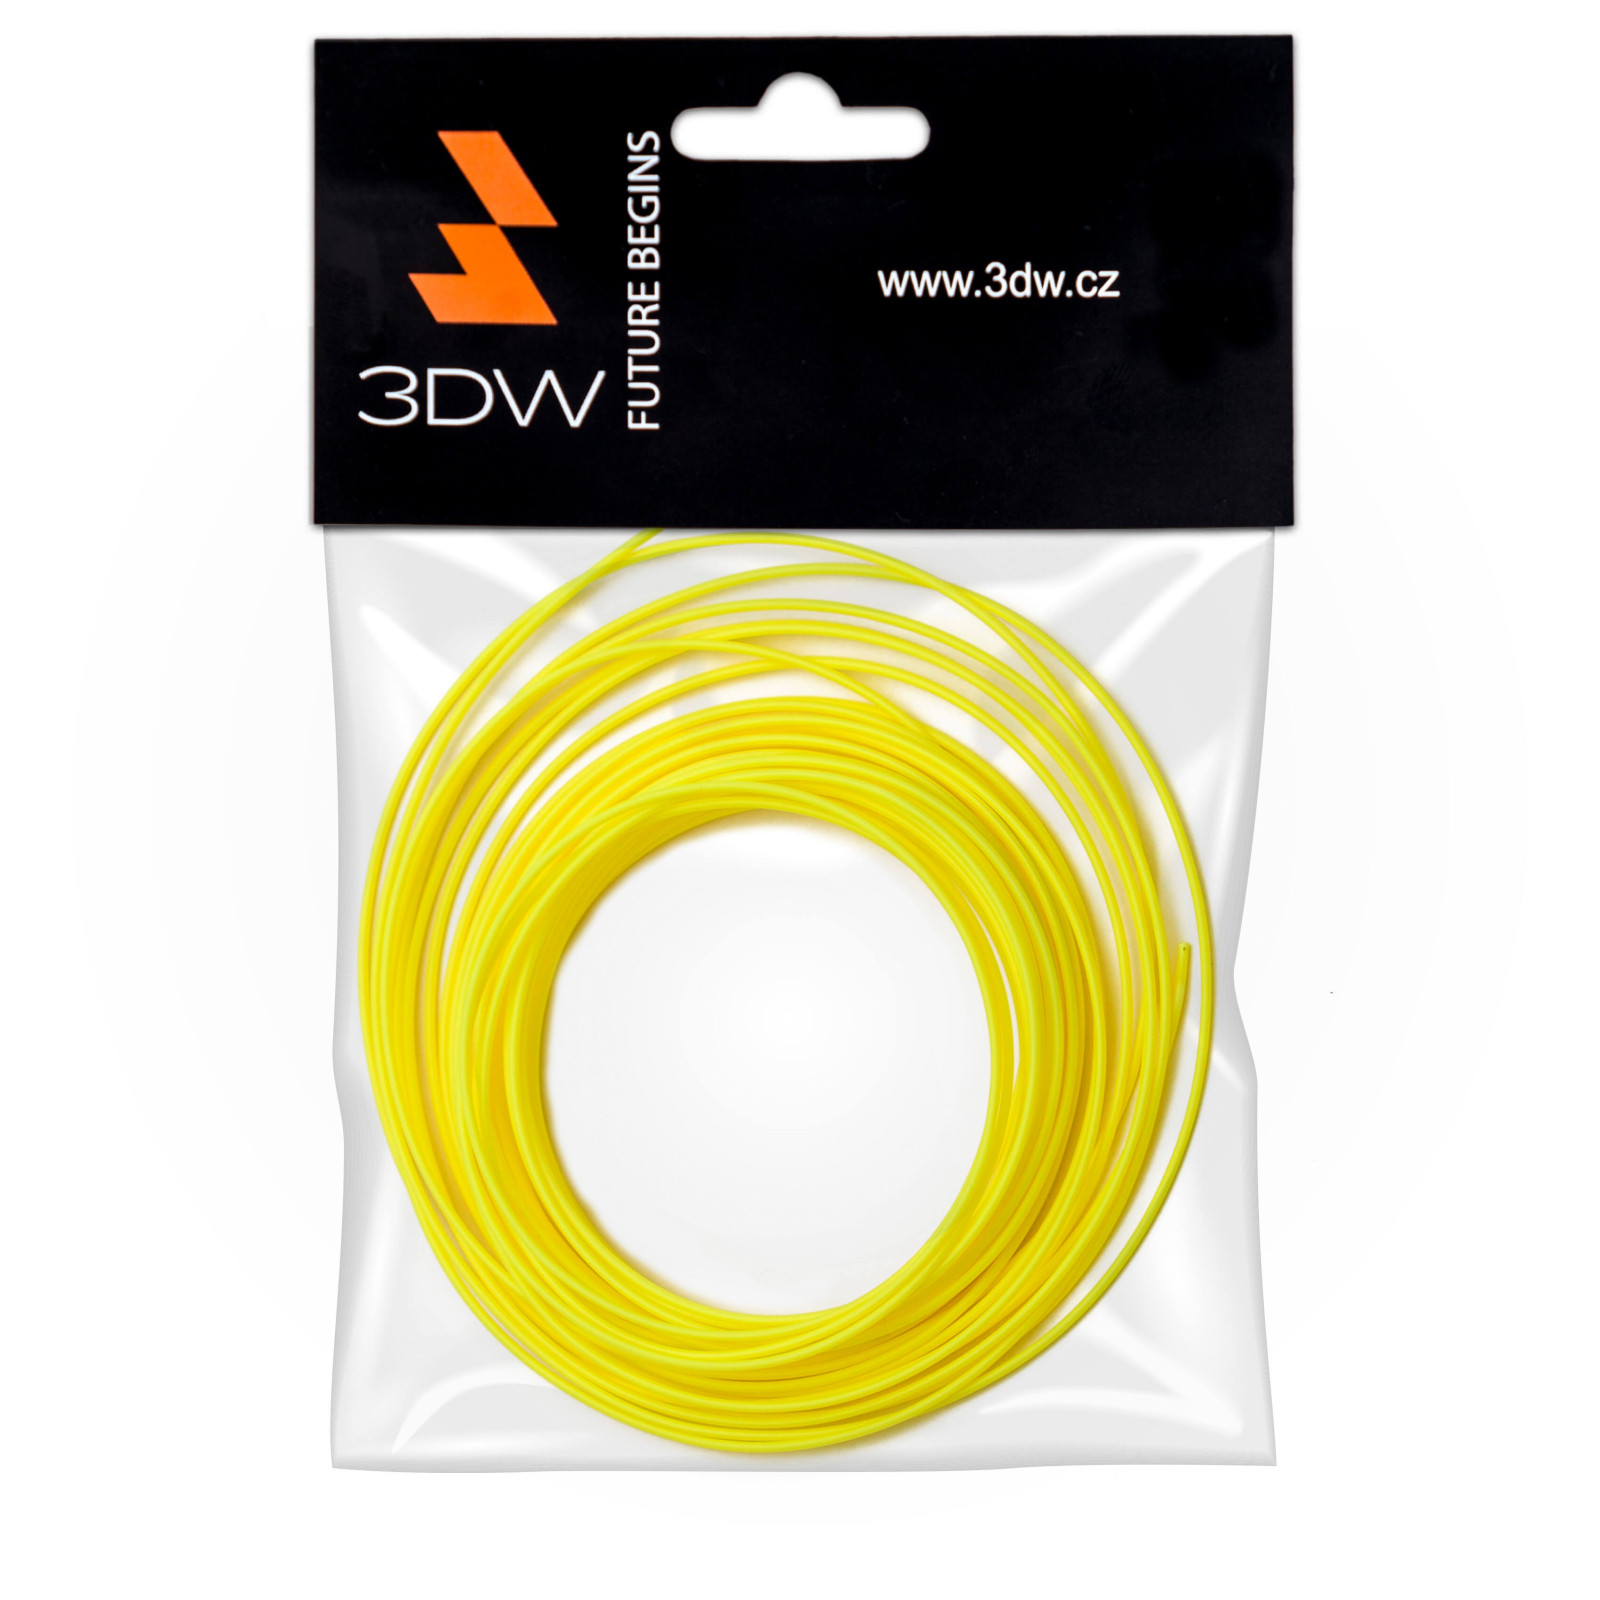 Levně 3DW - HiPS filament 1,75mm žlutá, 10m, tisk 200-230°C